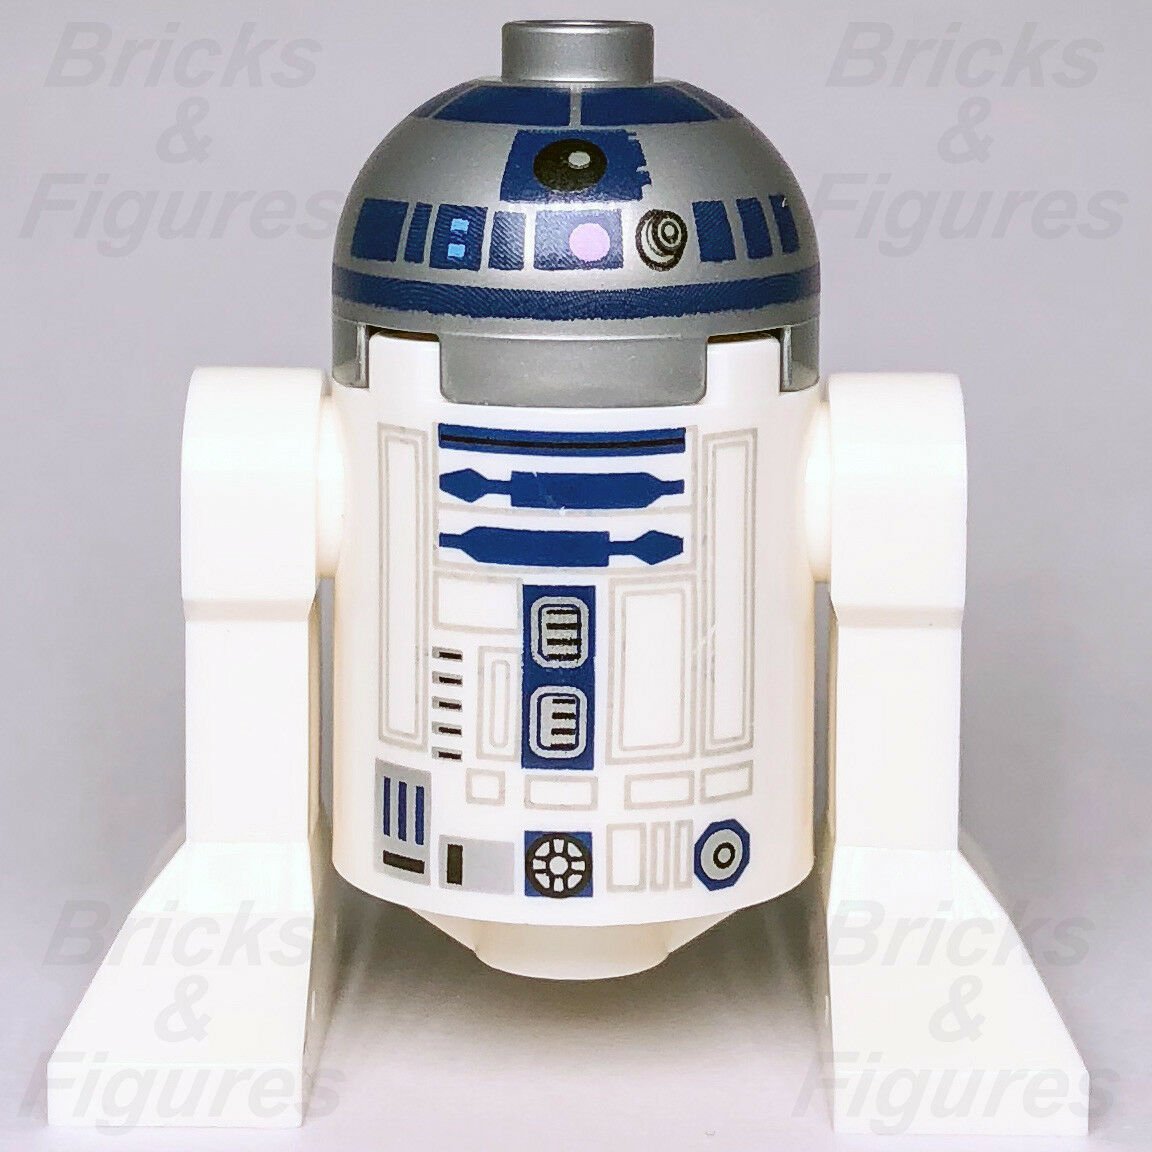 New Star Wars LEGO R2-D2 Astromech Droid Minifigure R2D2 75136 75092 75096 - Bricks & Figures